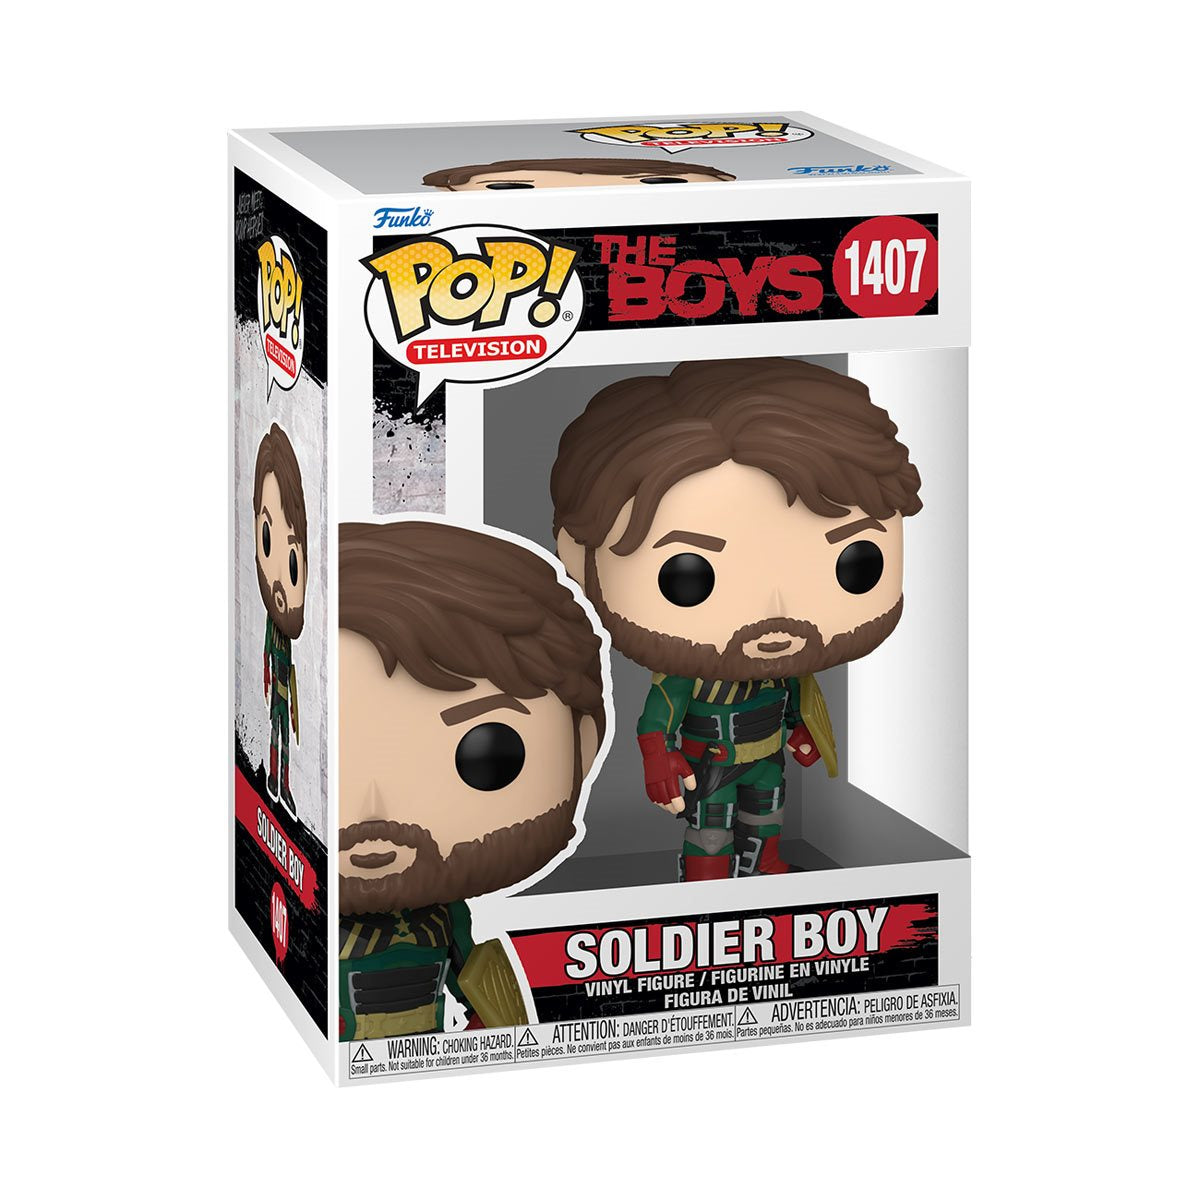 POP! TV The Boys Soldier Boy #1407